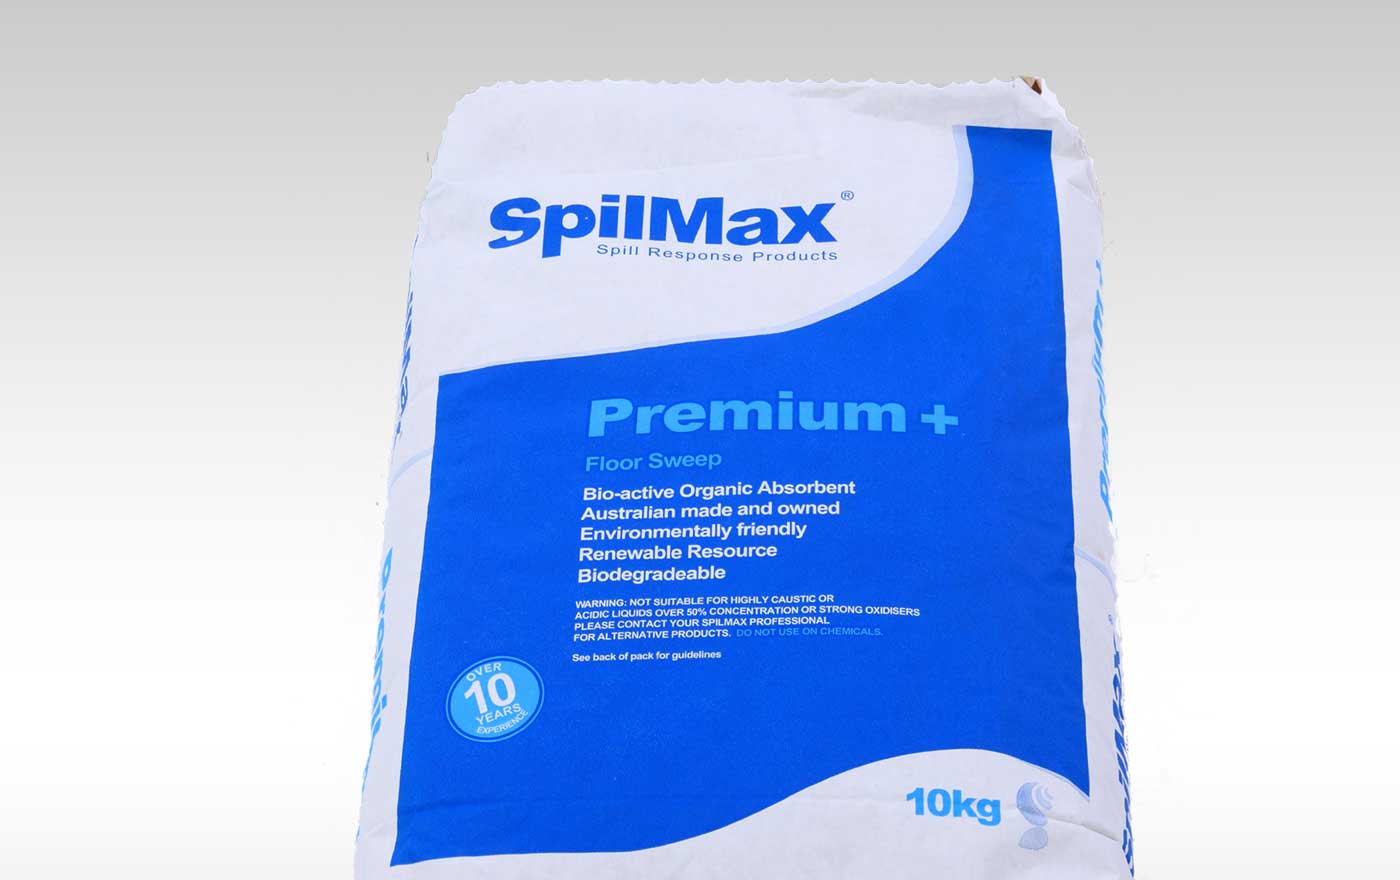 SpilMax Premium Plus Floor Sweep 10kg bag